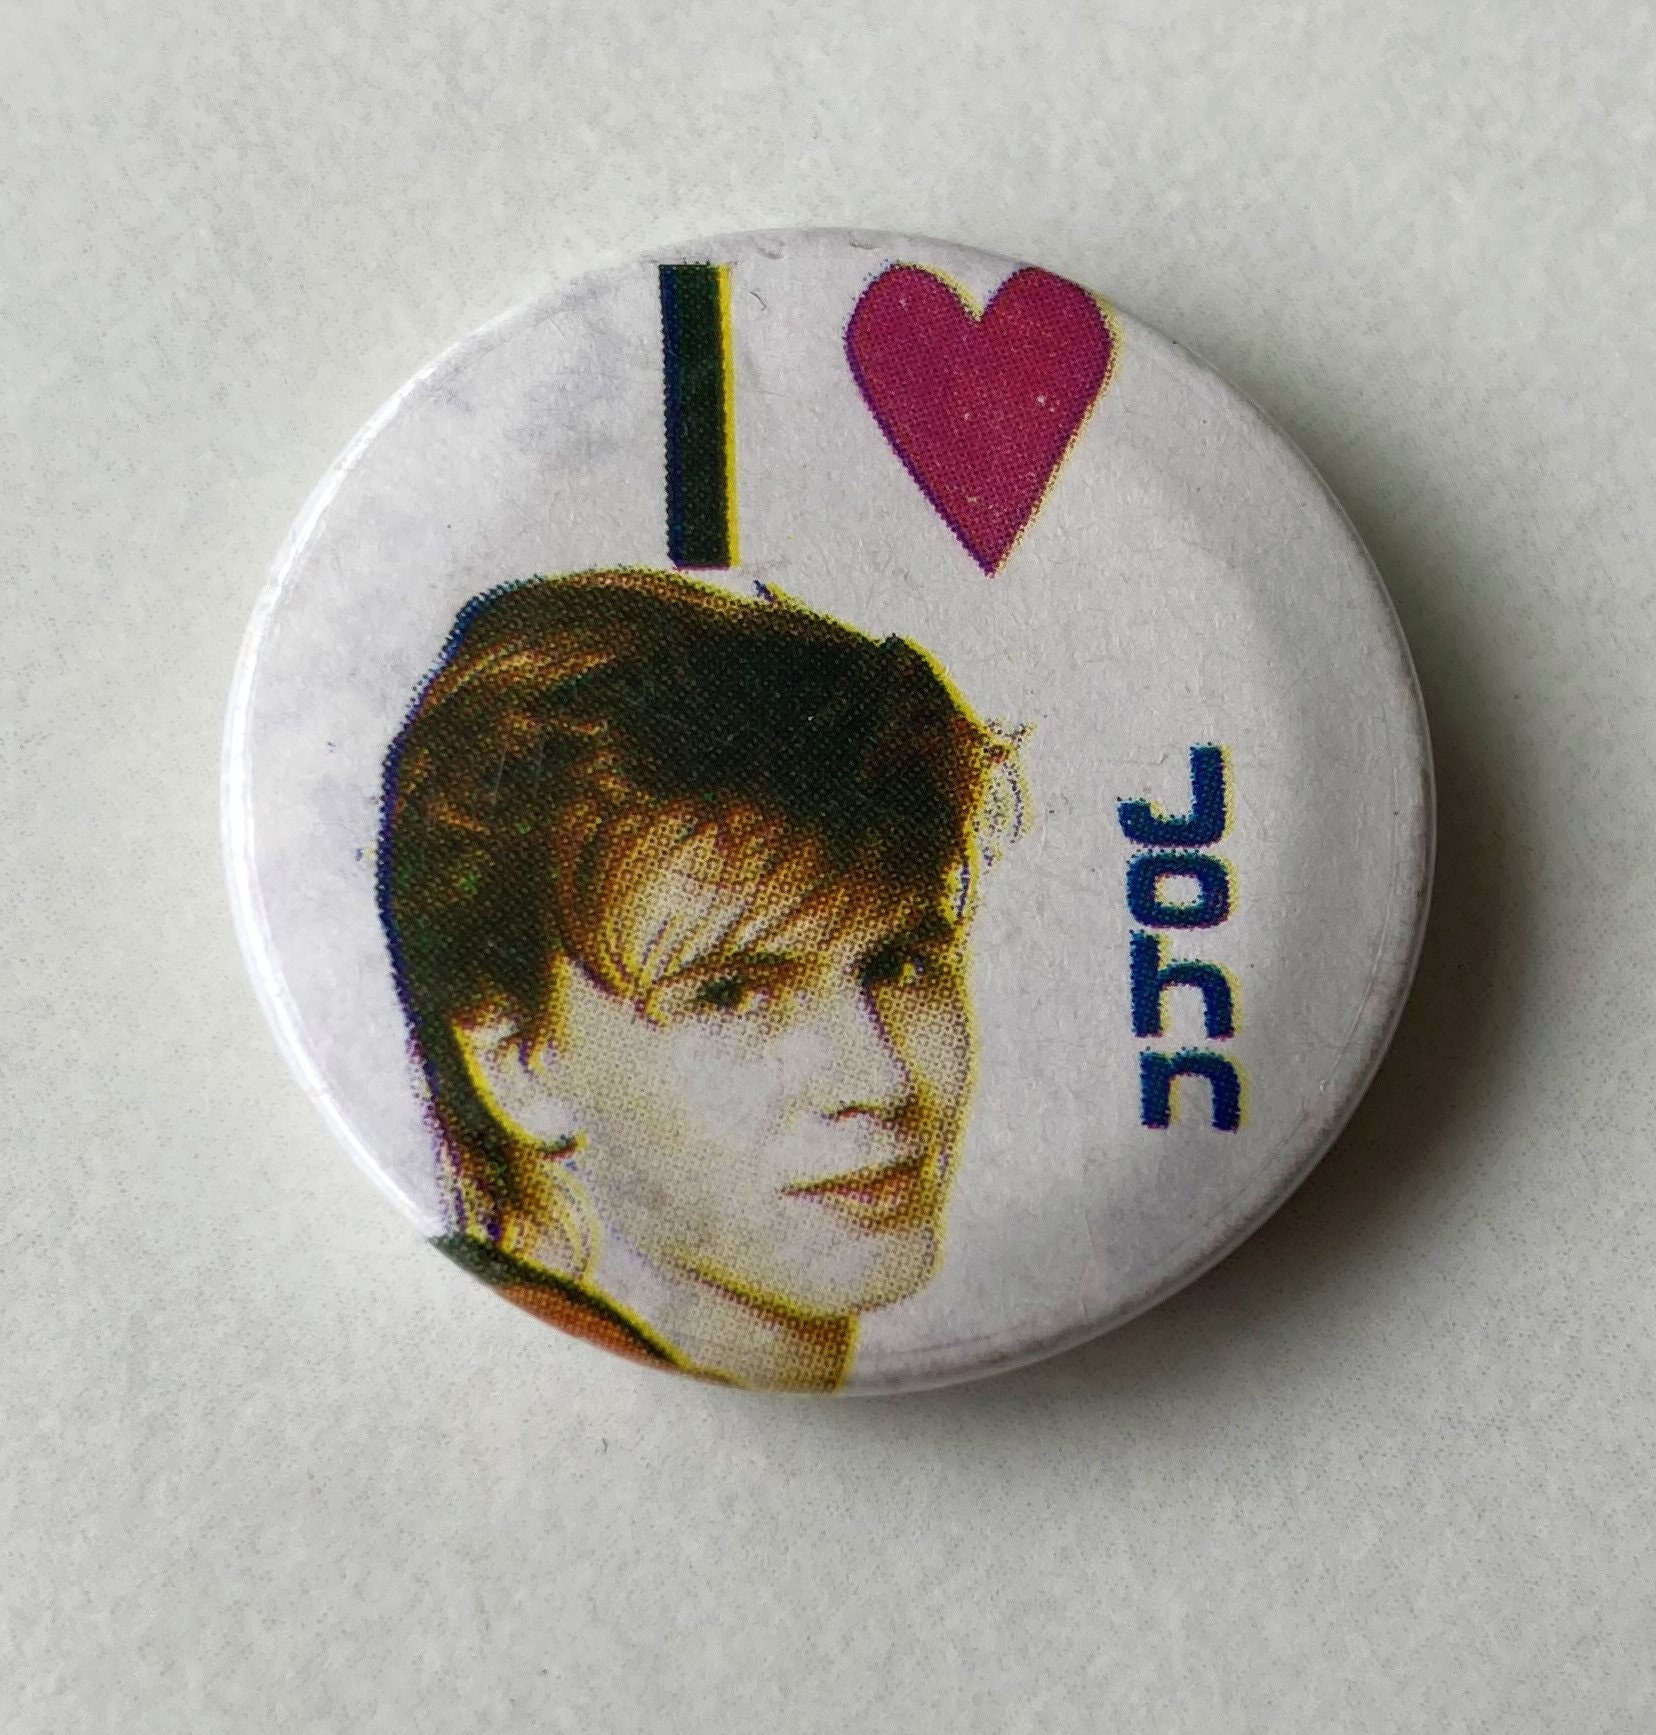 Duran Duran 80's Retro Pinback Button Badge Pin Power Station John Taylor #276 